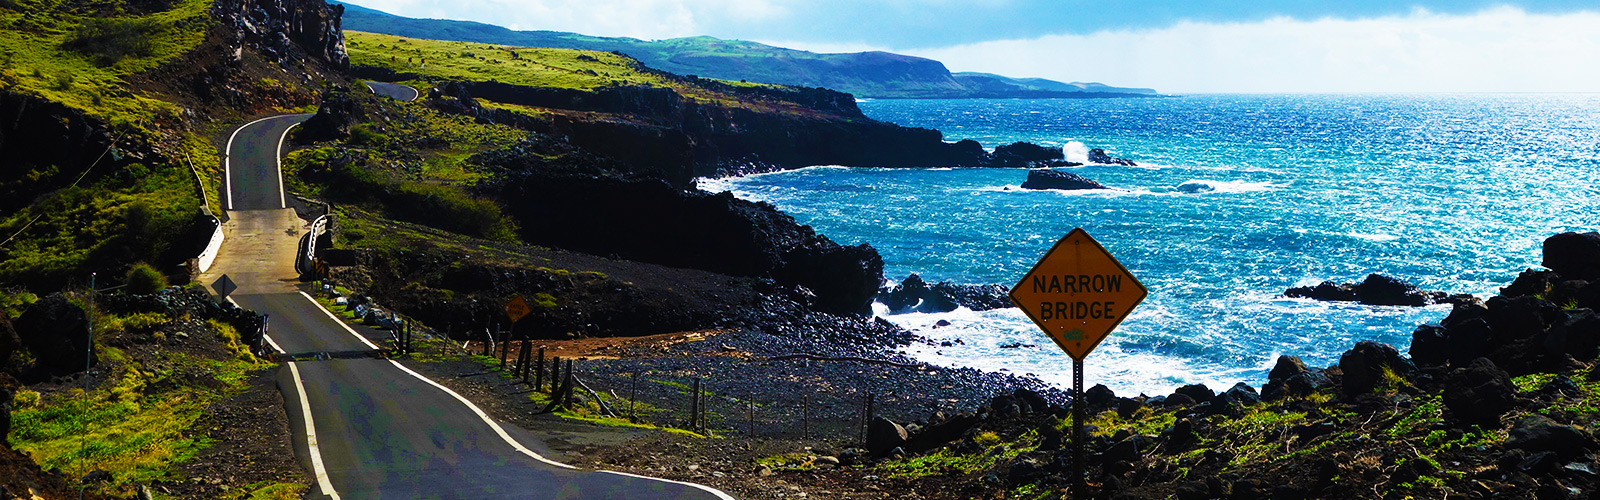 Tips for The Road to Hana – Maui